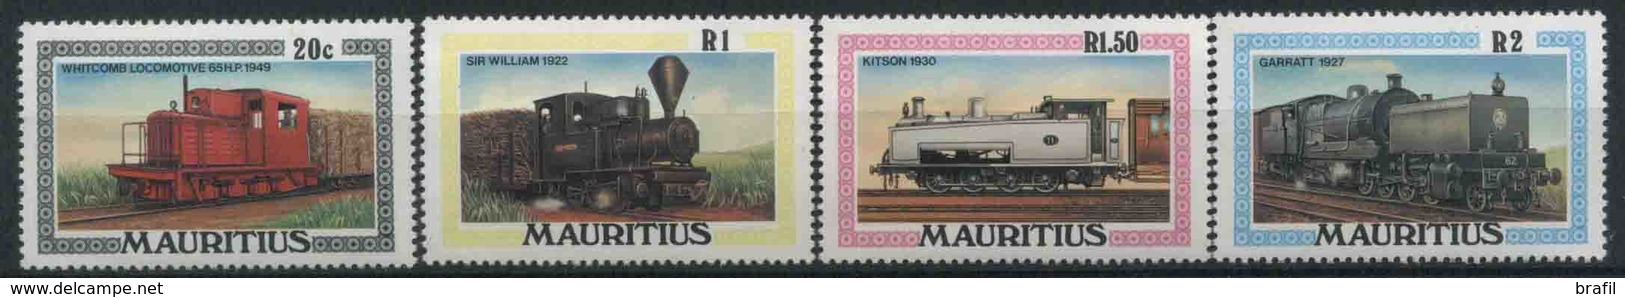 1979 Mauritius, Treni Di Mauritius, Serie Completa Nuova (**) - Maurice (1968-...)